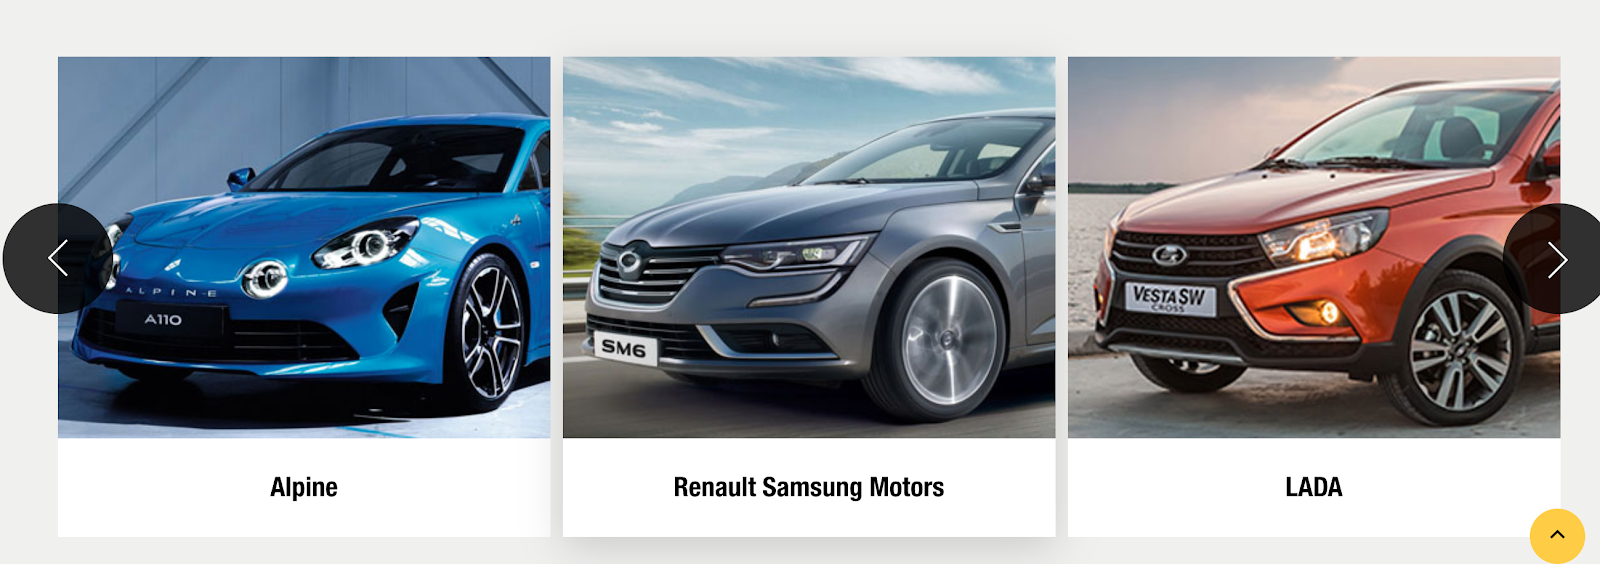 WordPress website examples, Renault Group